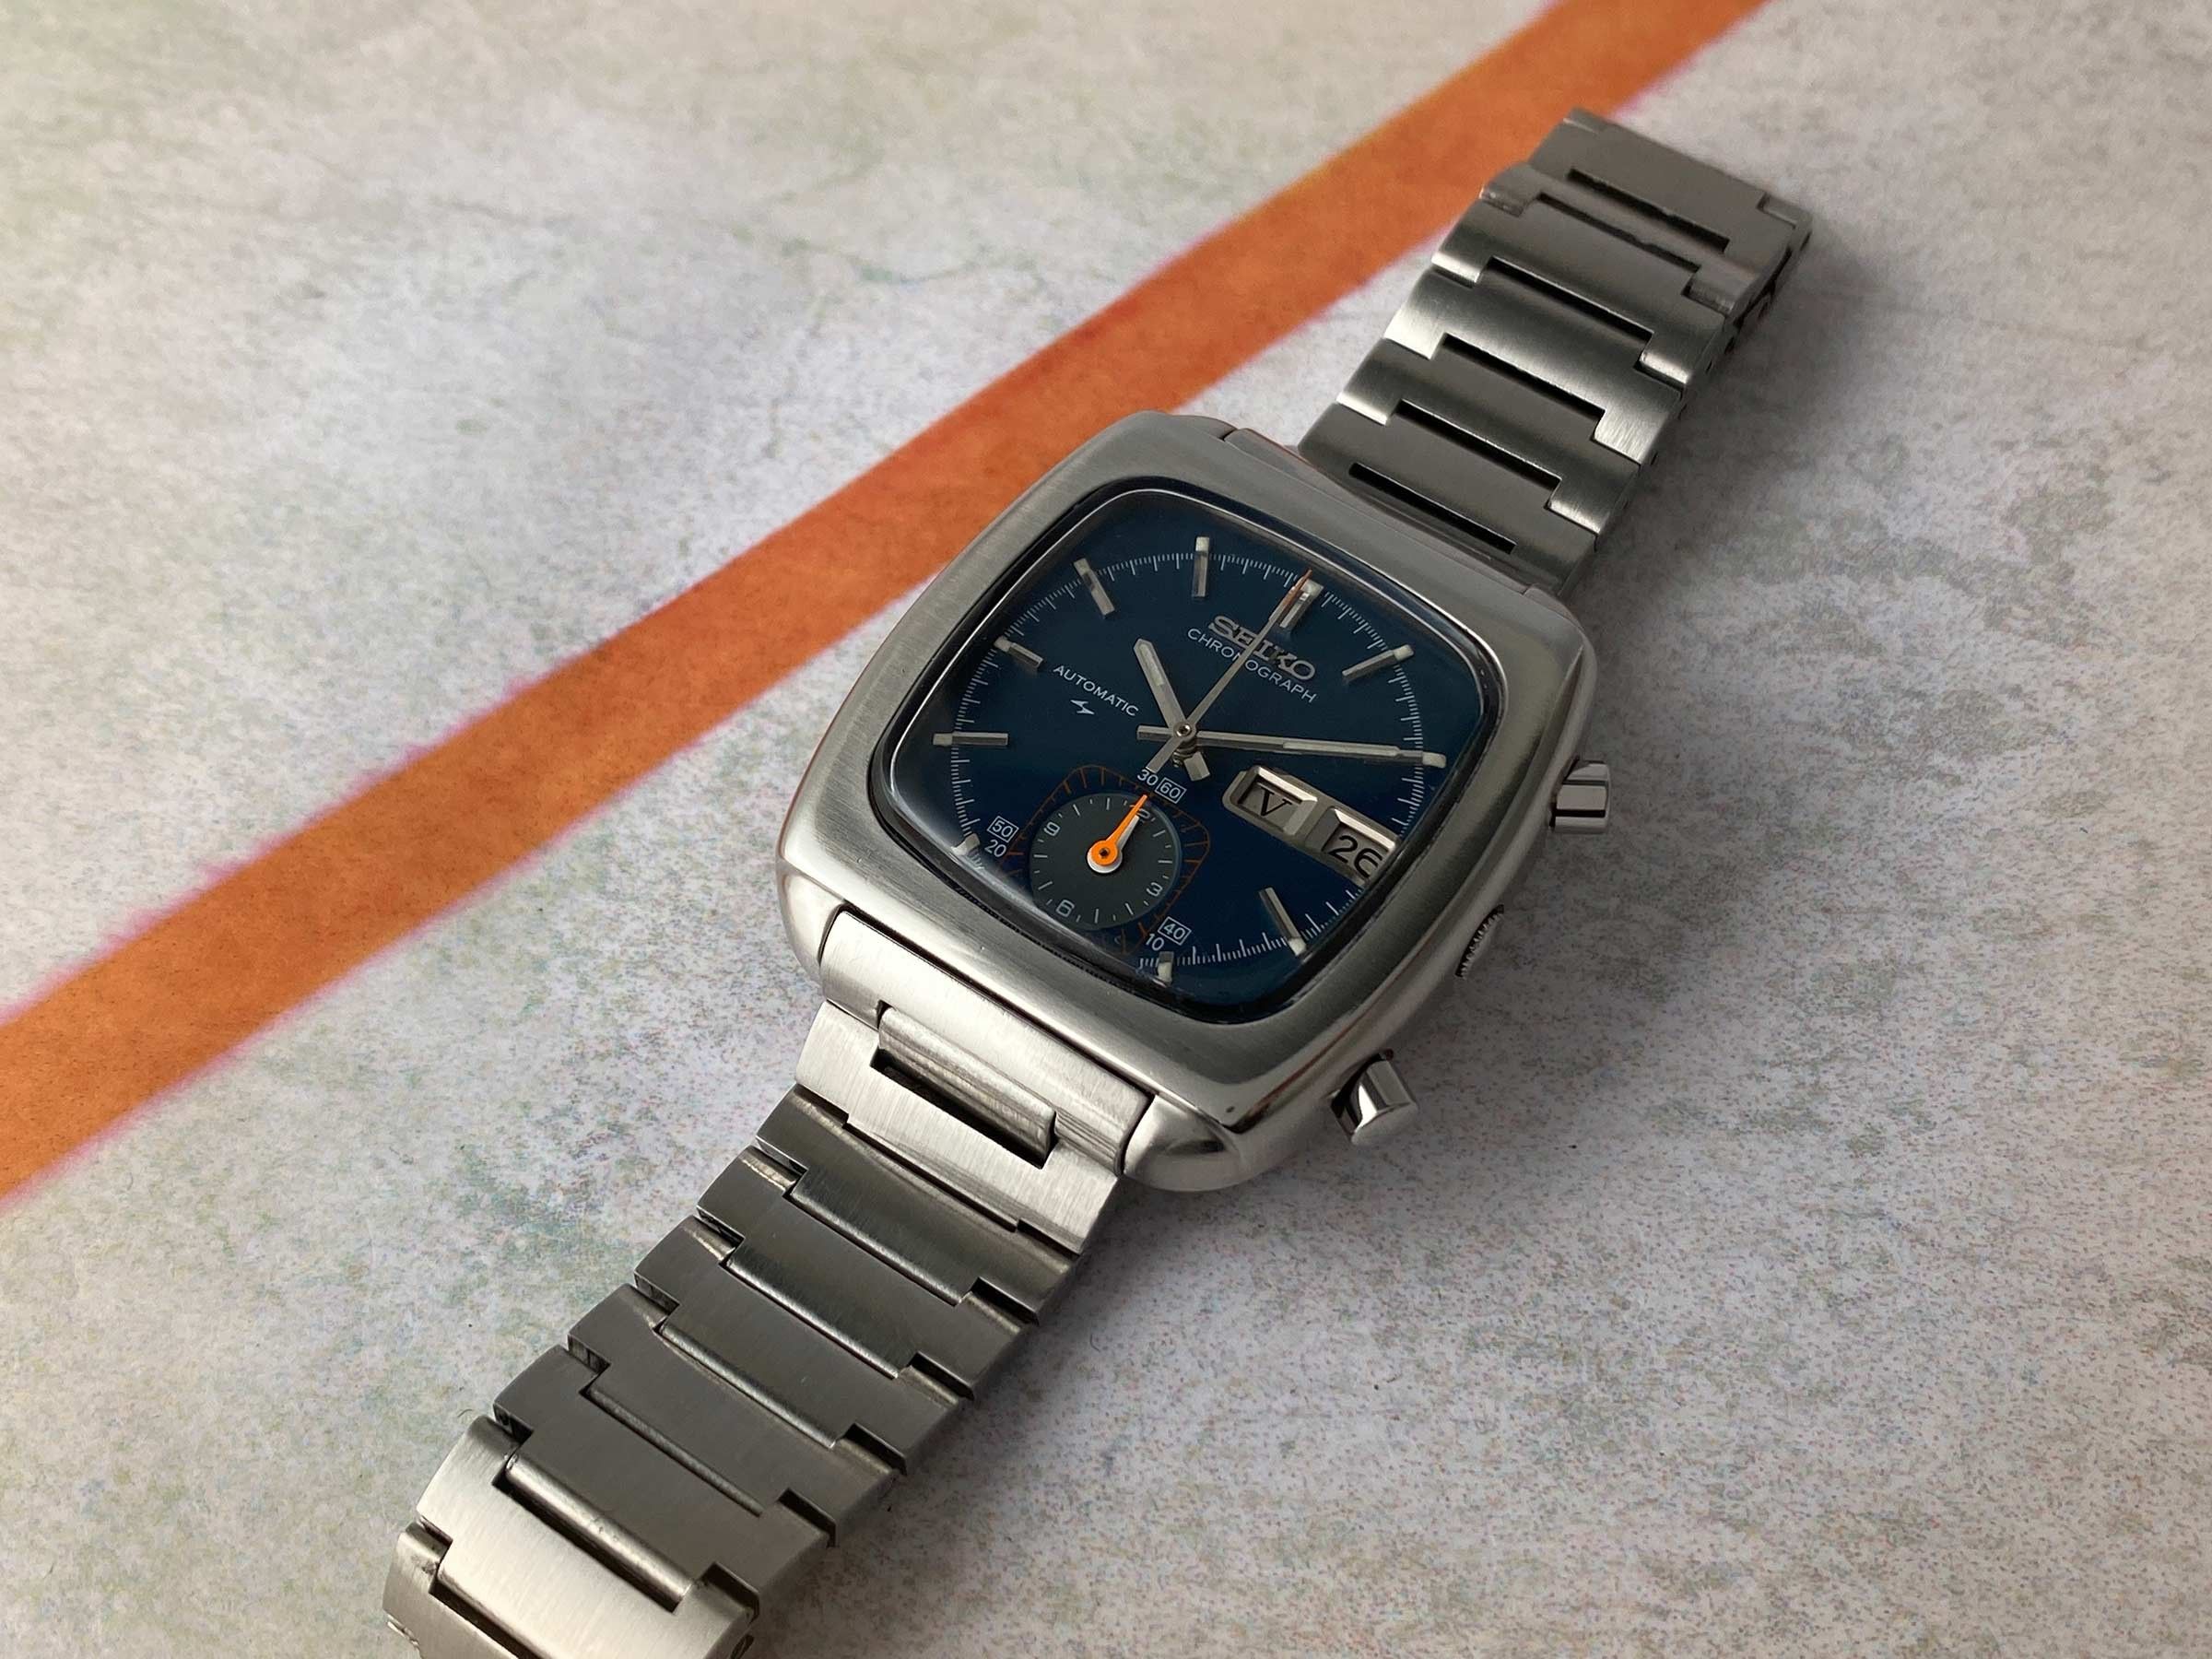 MINT SEIKO MONACO Ref 7016-5000 Vintage automatic chronograph watch Cal 7016  SPECTACULAR *** IMPRESSIVE CONDITION *** Seiko Vintage watches - Watches83